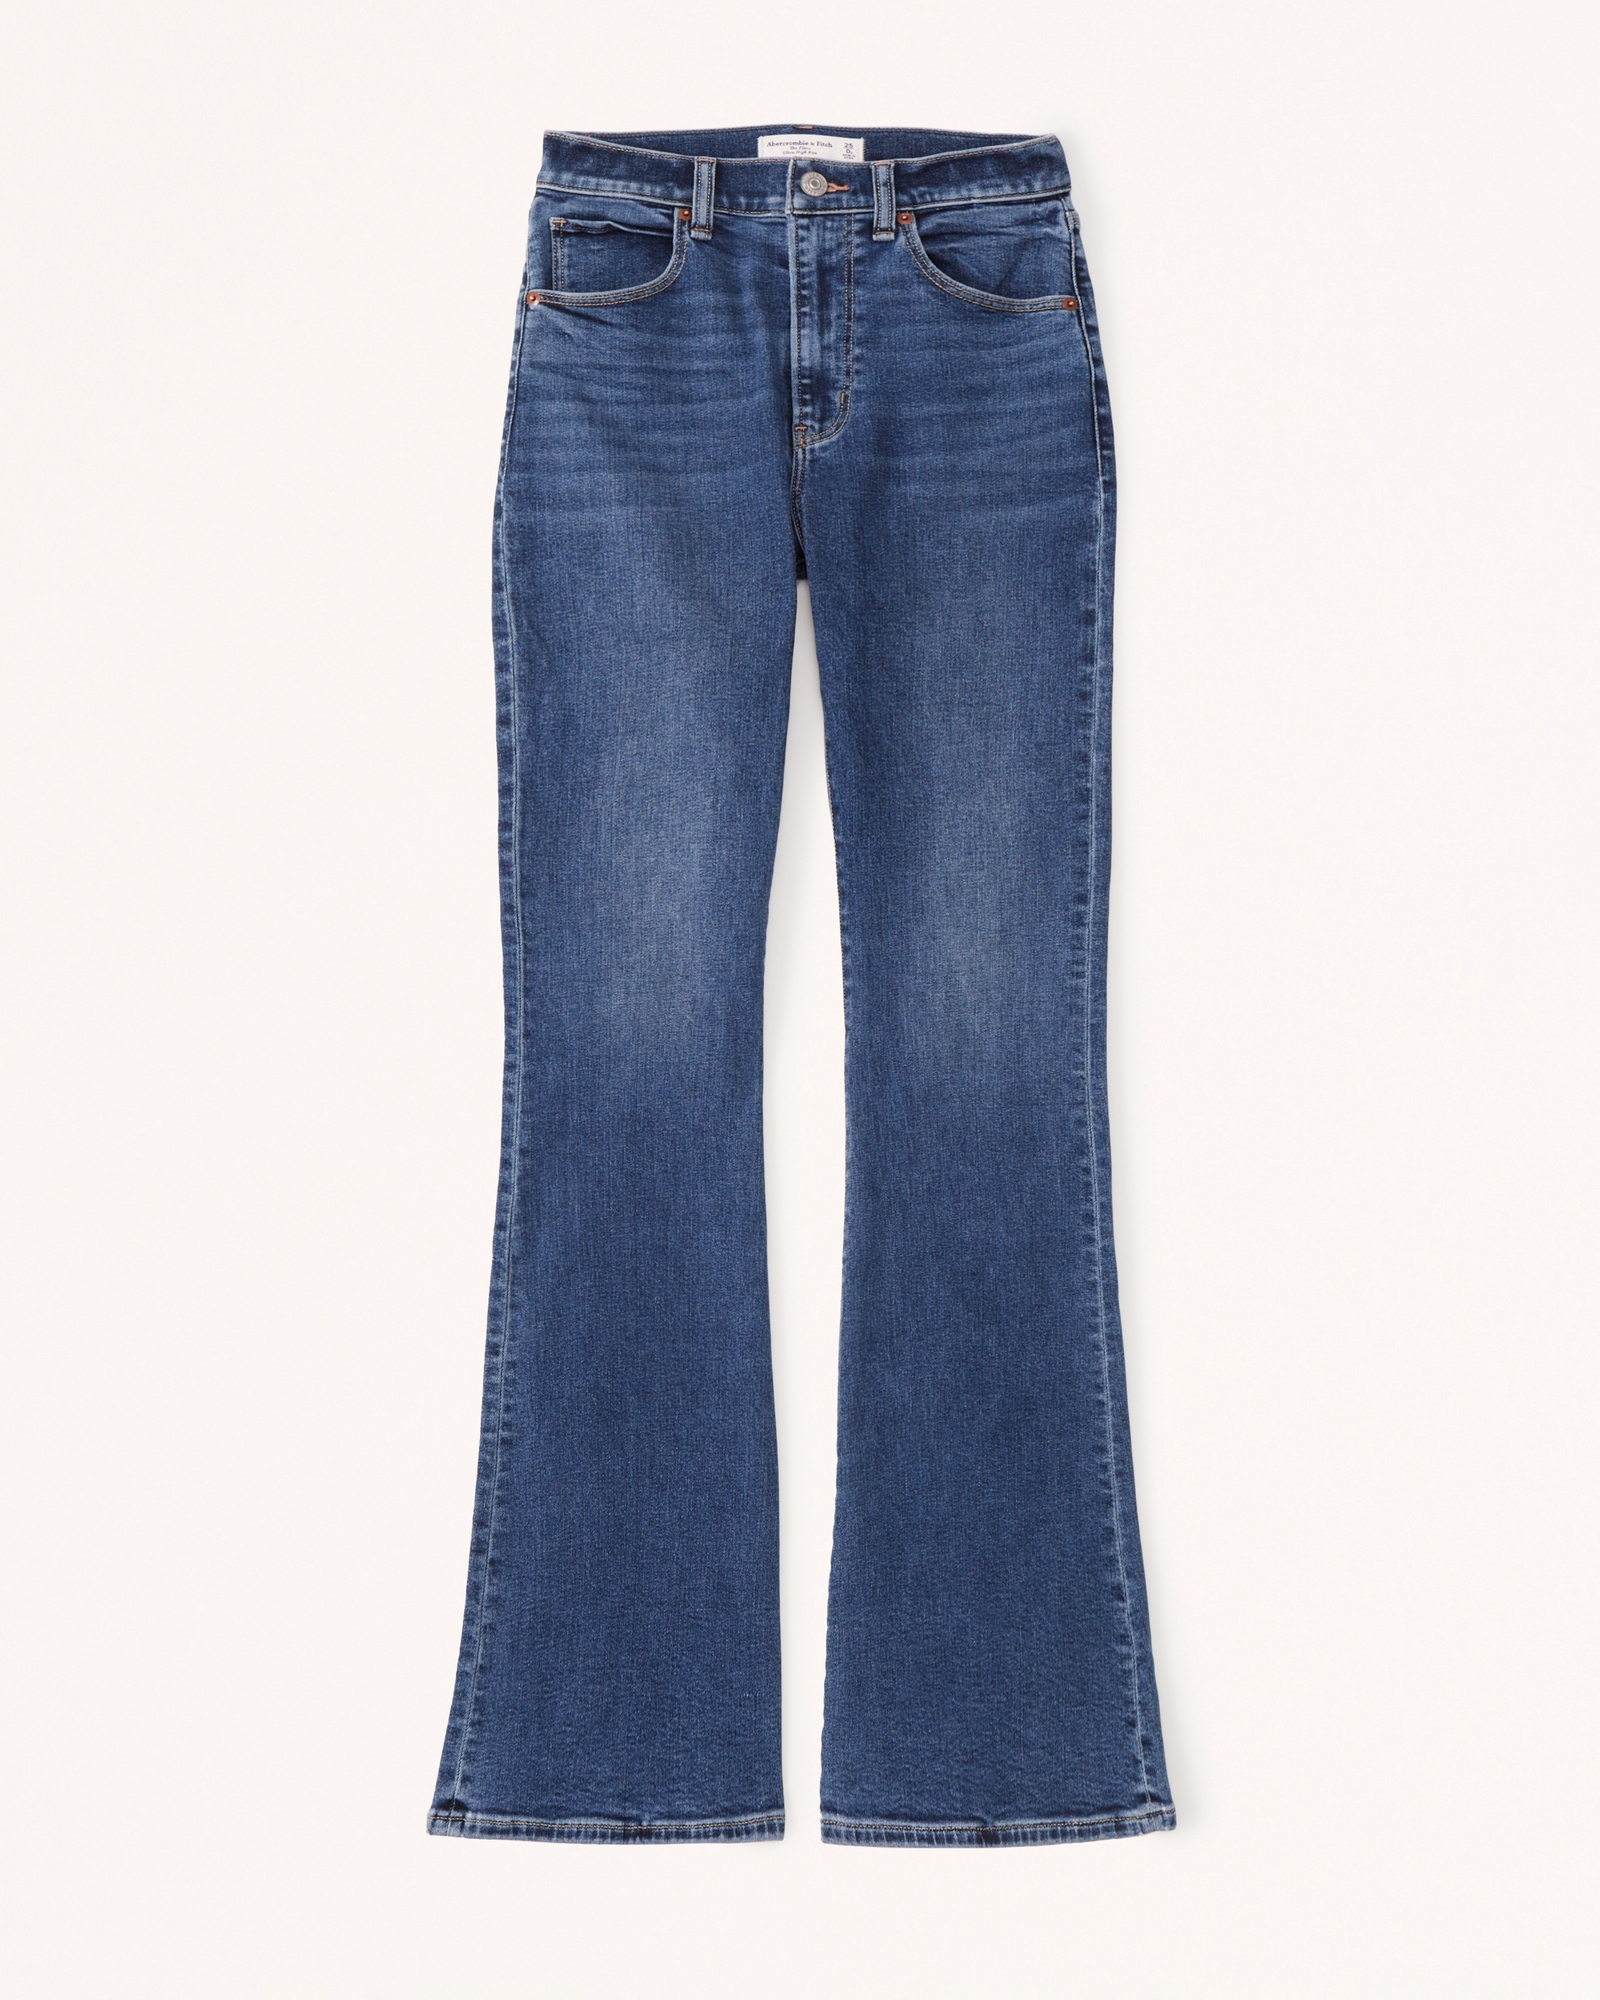 Hollister Co. Cotton/Polyester/Elastane Flare Jeans for Women